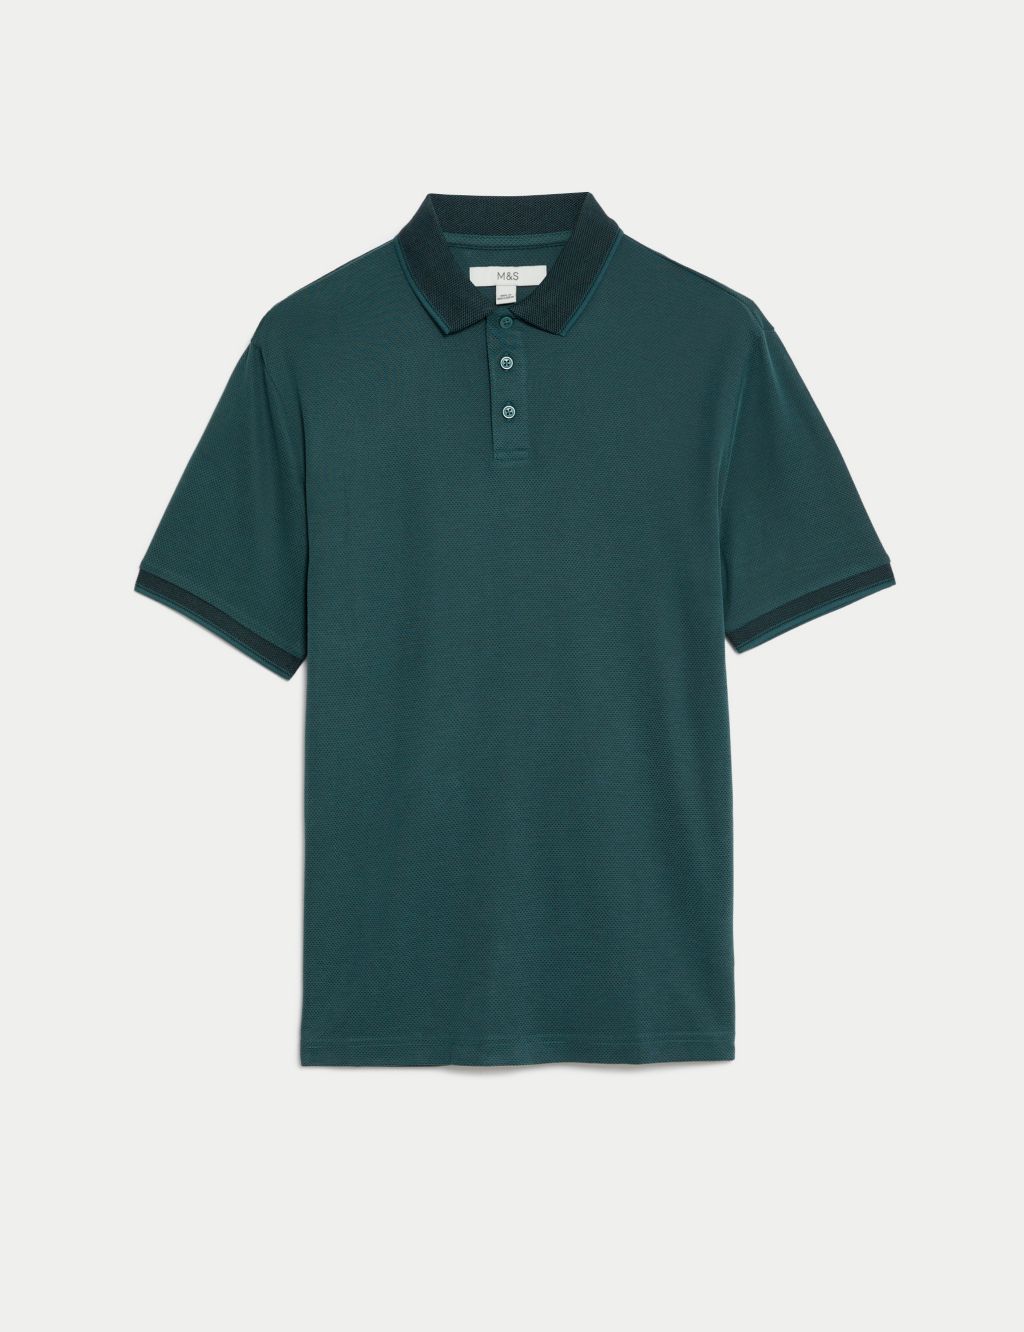 Modal Rich Tipped Collar Polo Shirt image 2